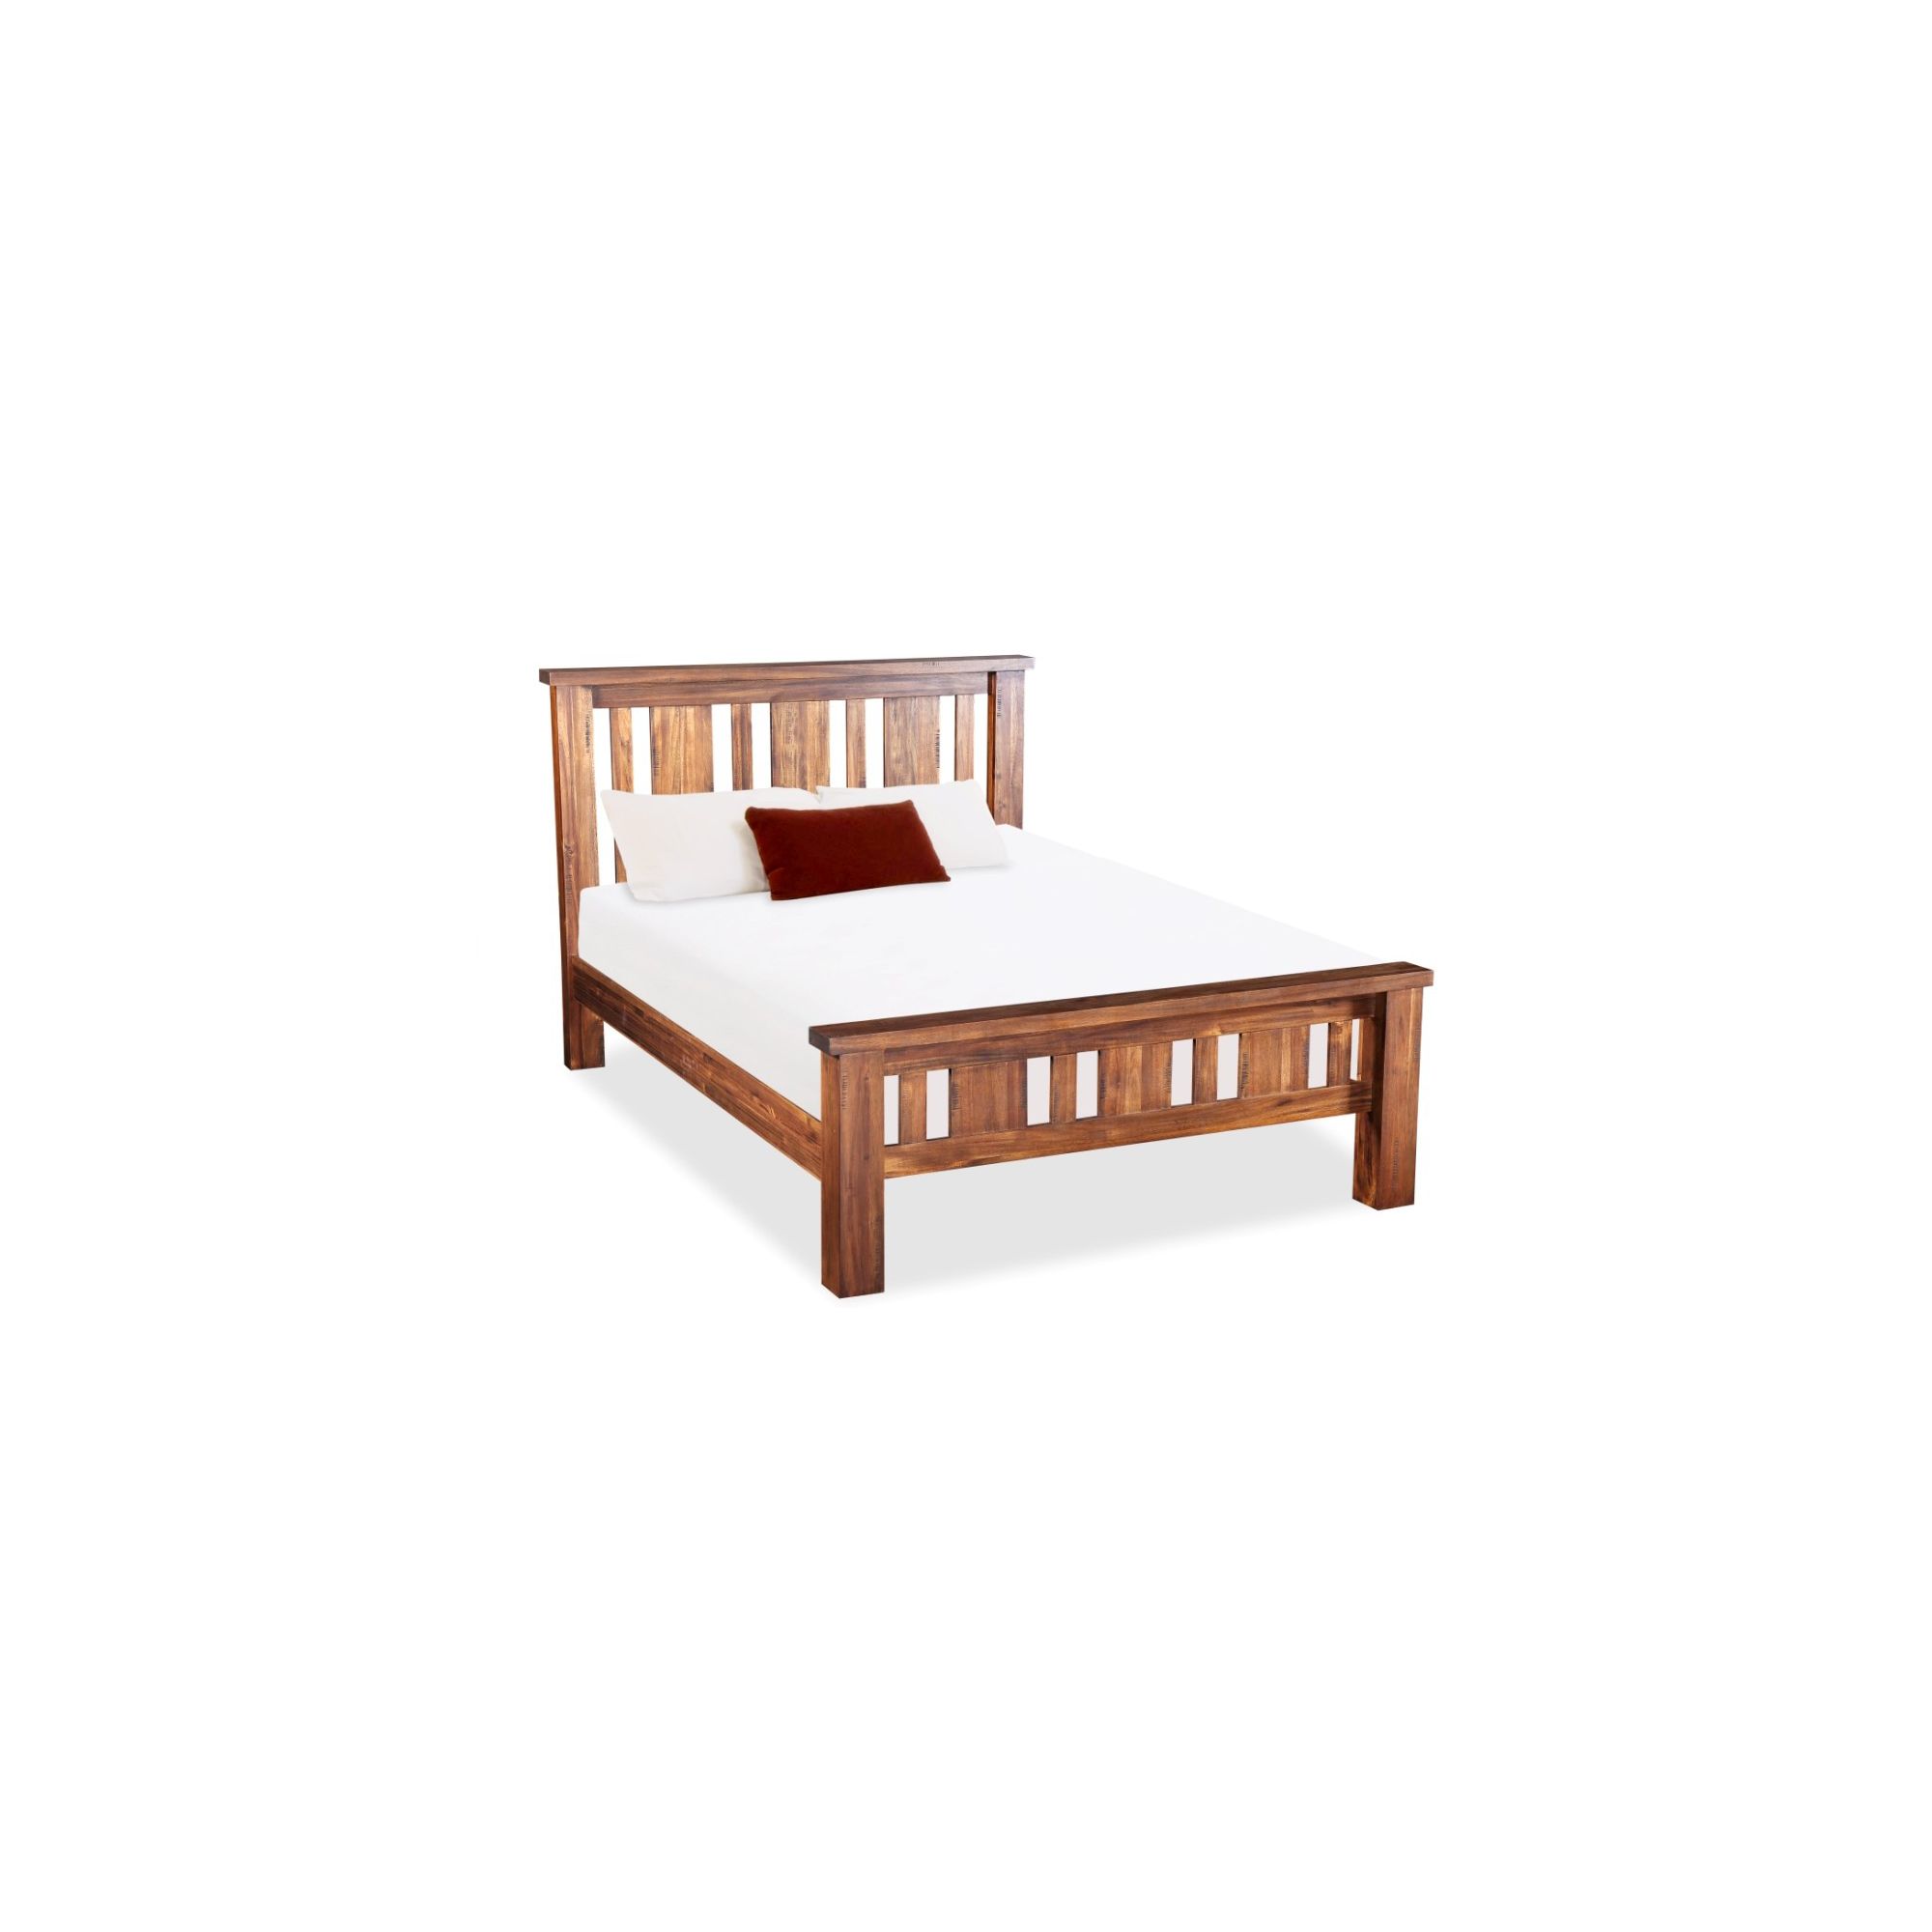 Alterton Furniture Romain Slatted Bed - King at Tescos Direct